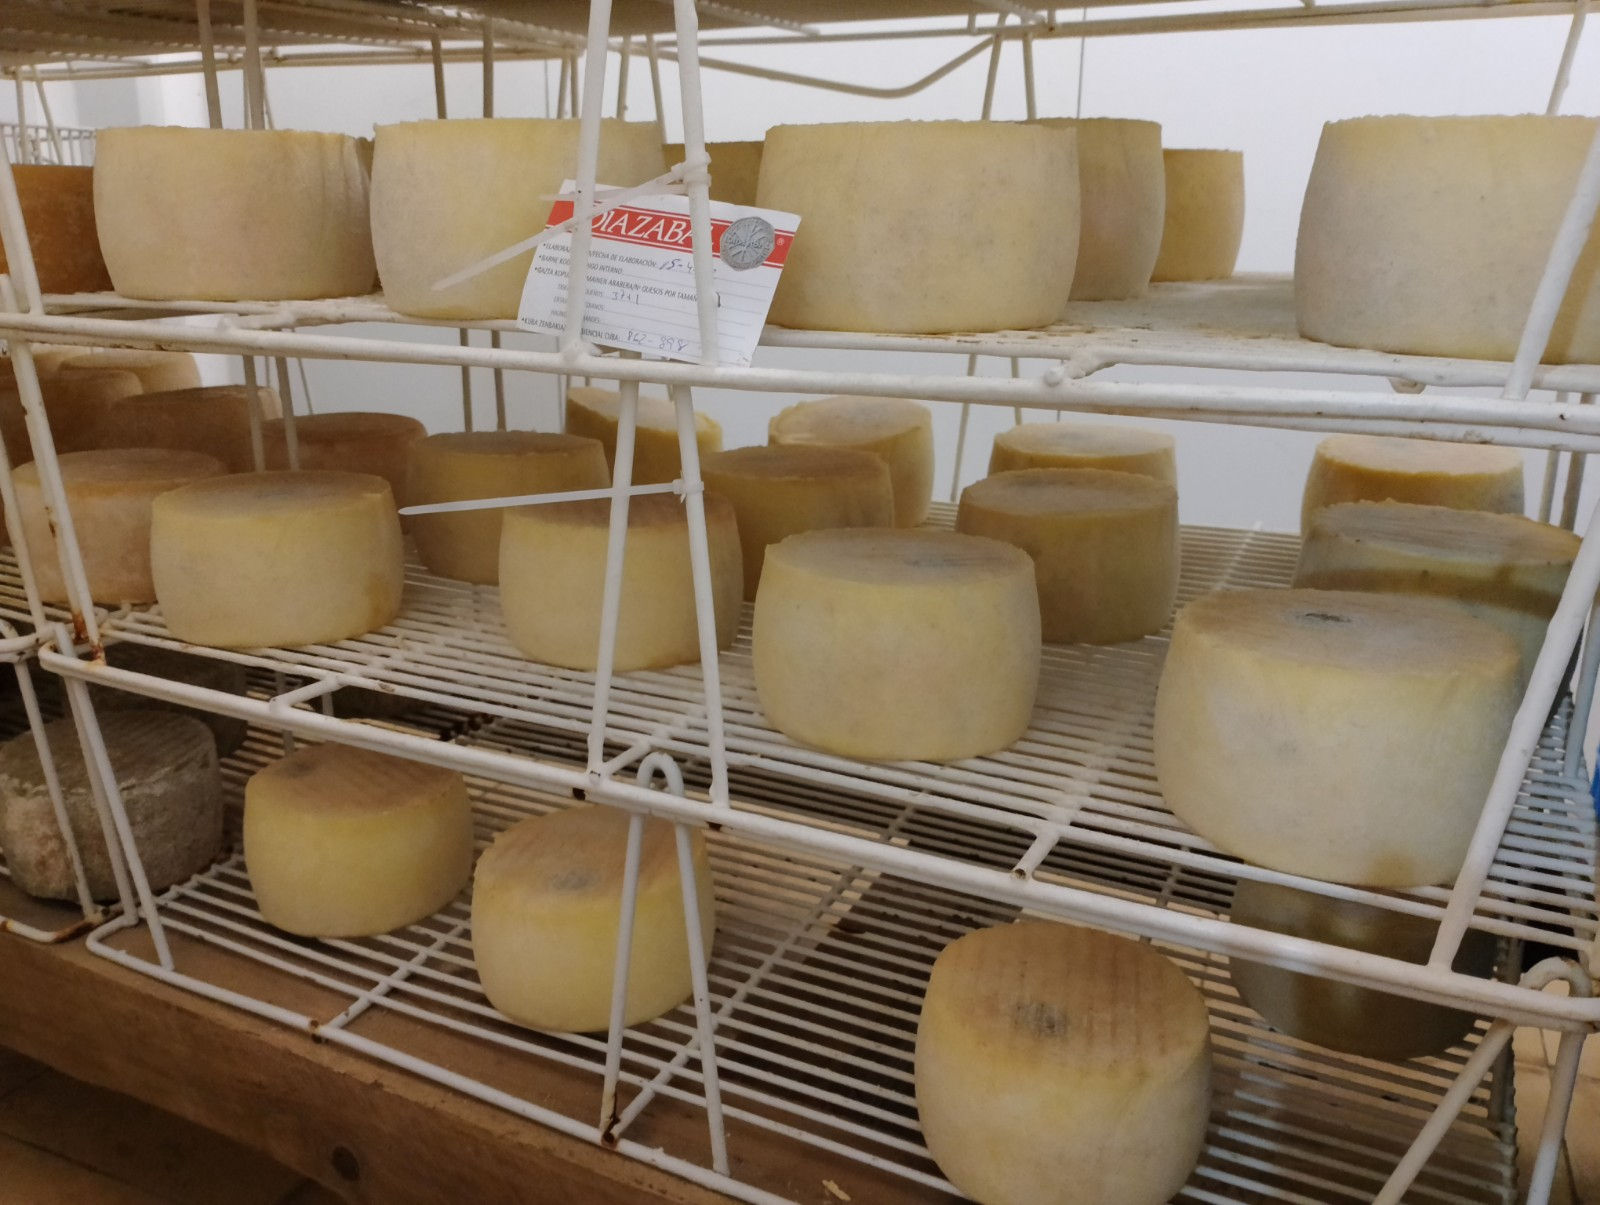 Artisanal cheeses made at the Adarrazpi dairy